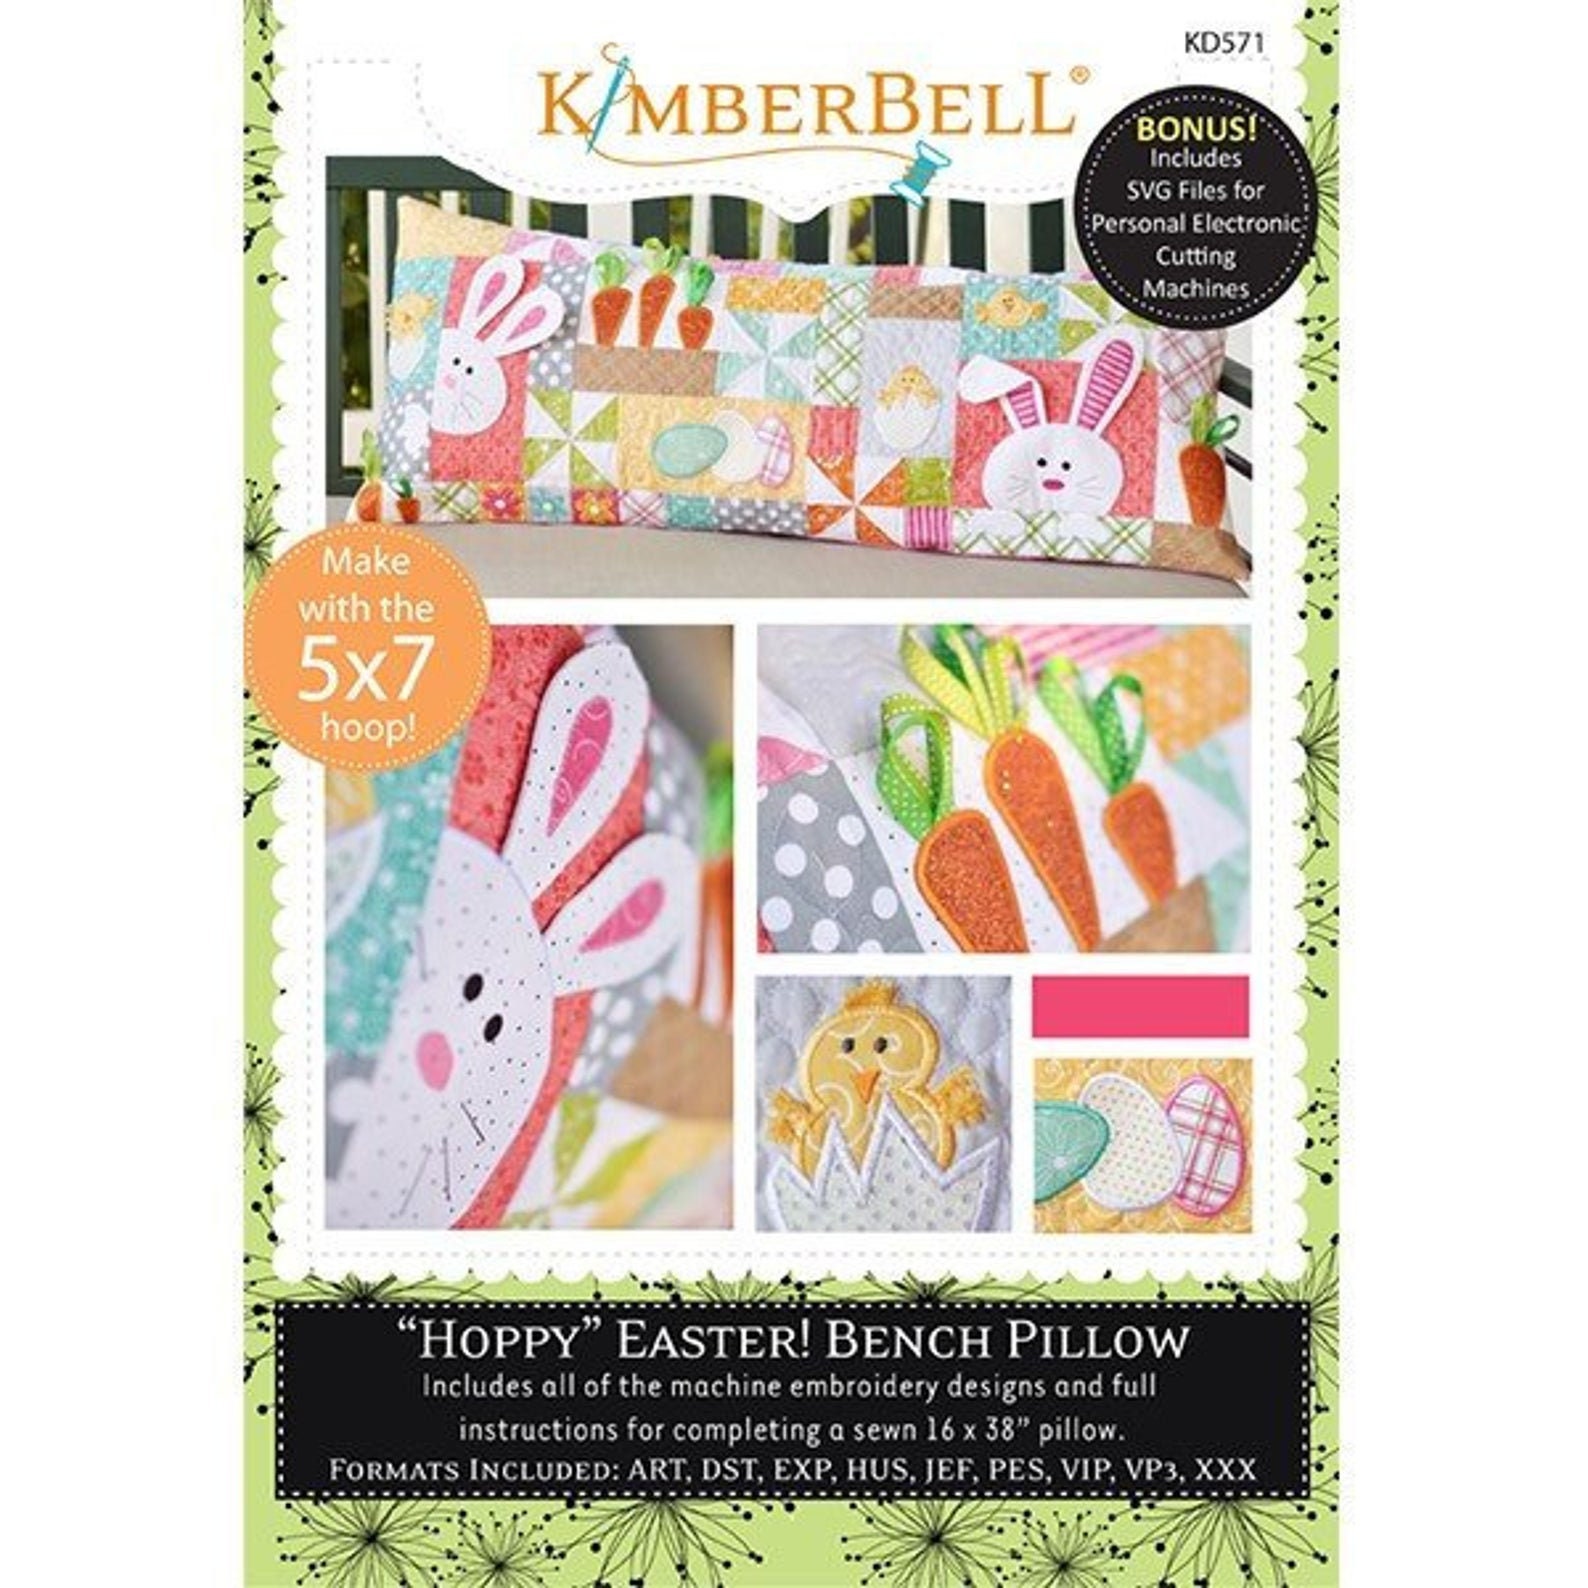 Kimberbell's Kitchen Glide Thread Kit (8 pcs) - 434886